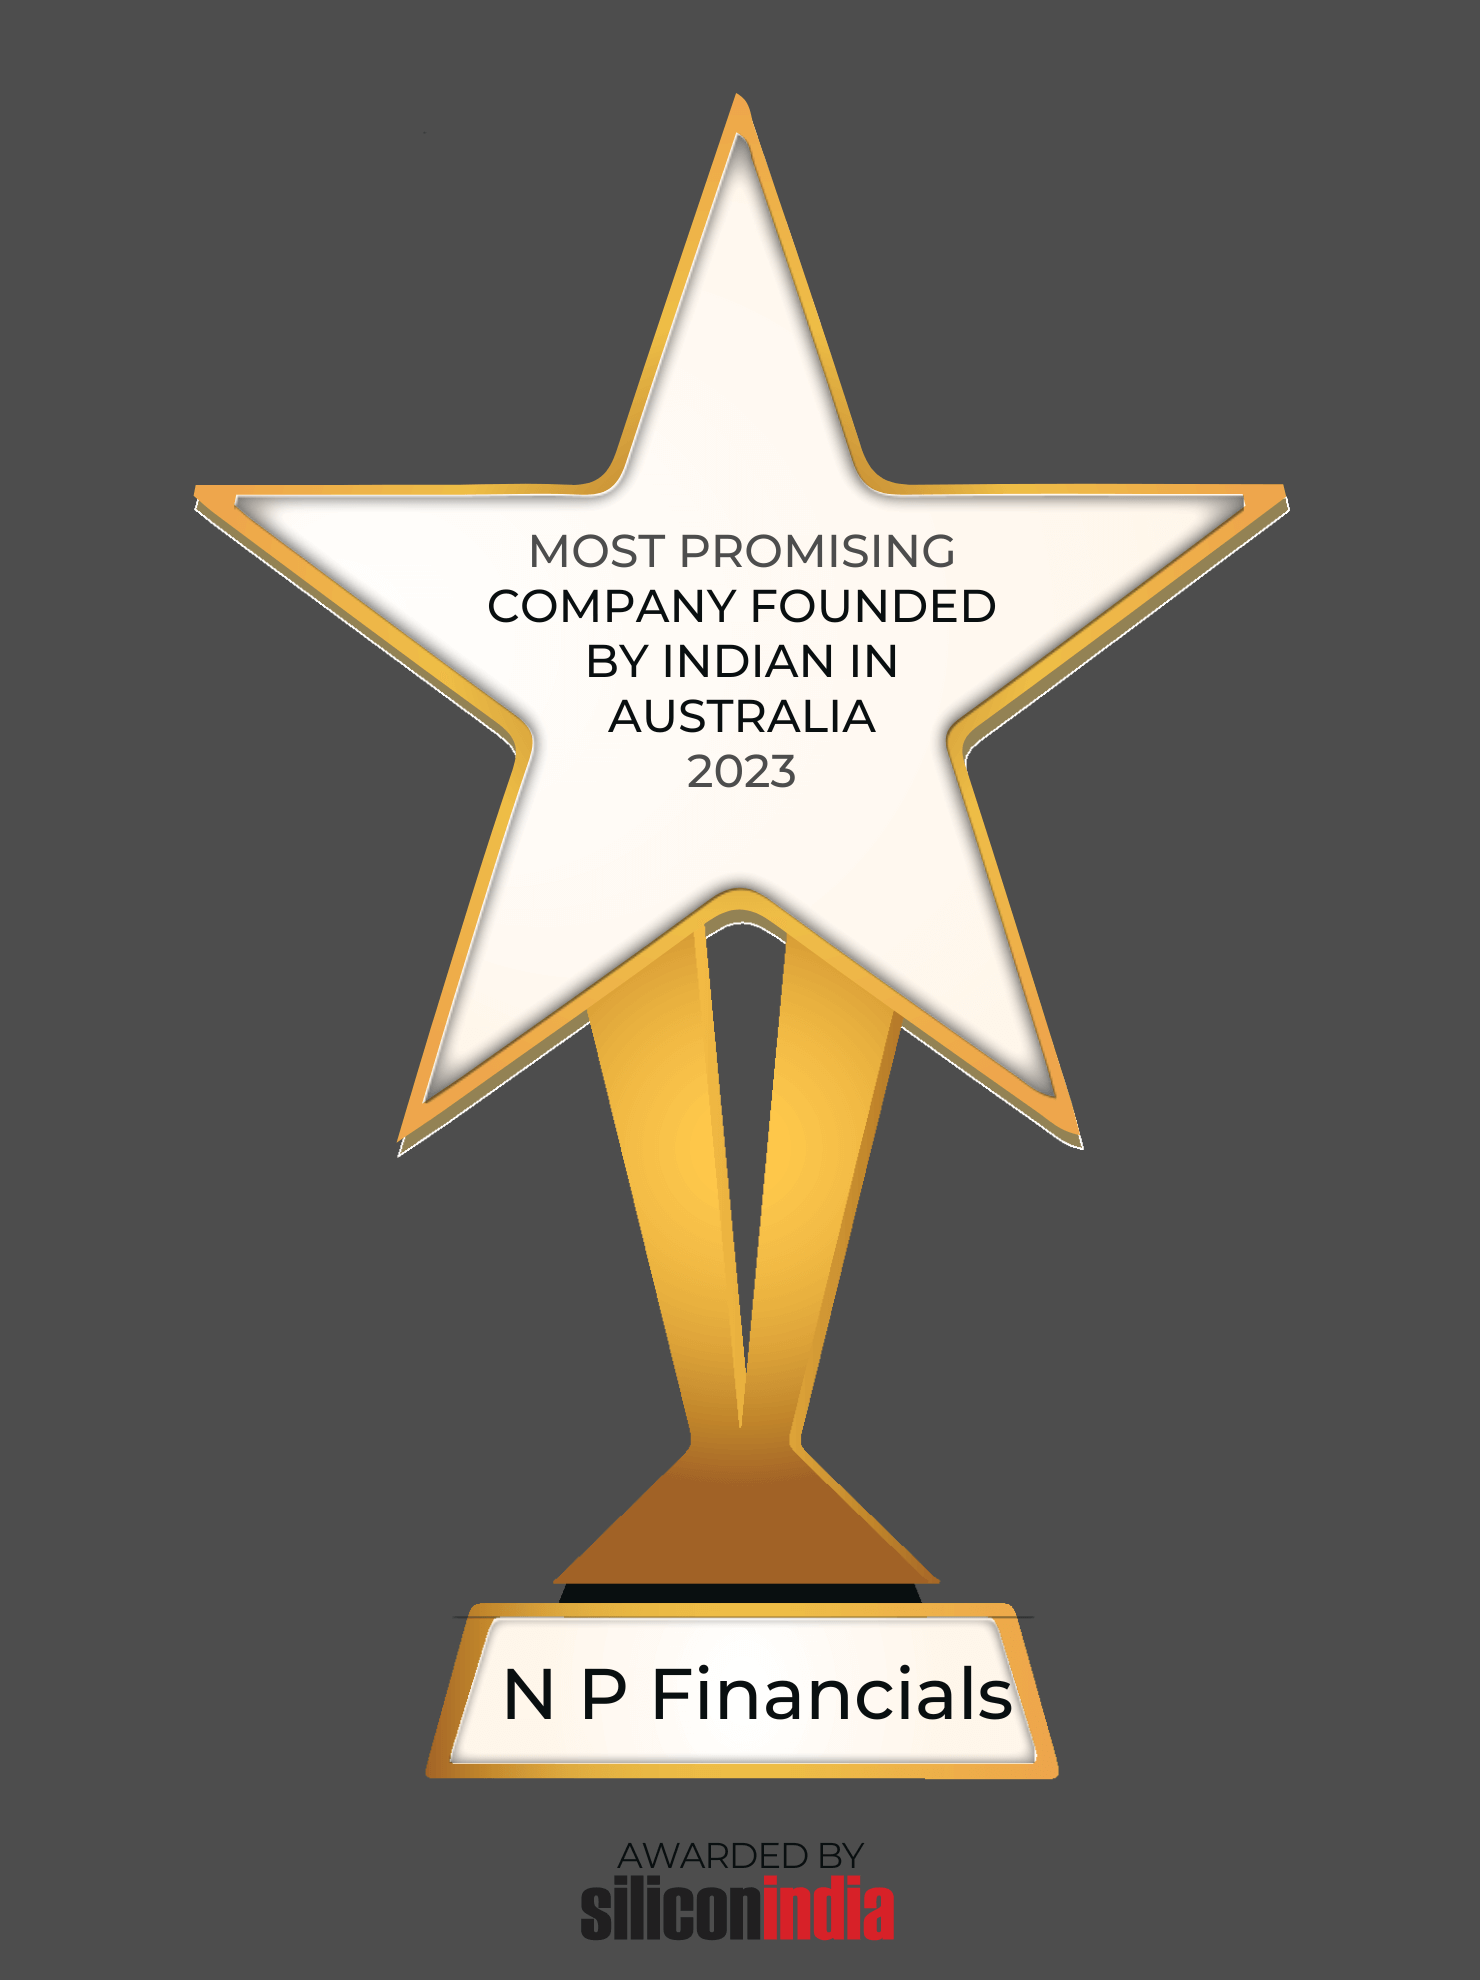 press release, NP Financials